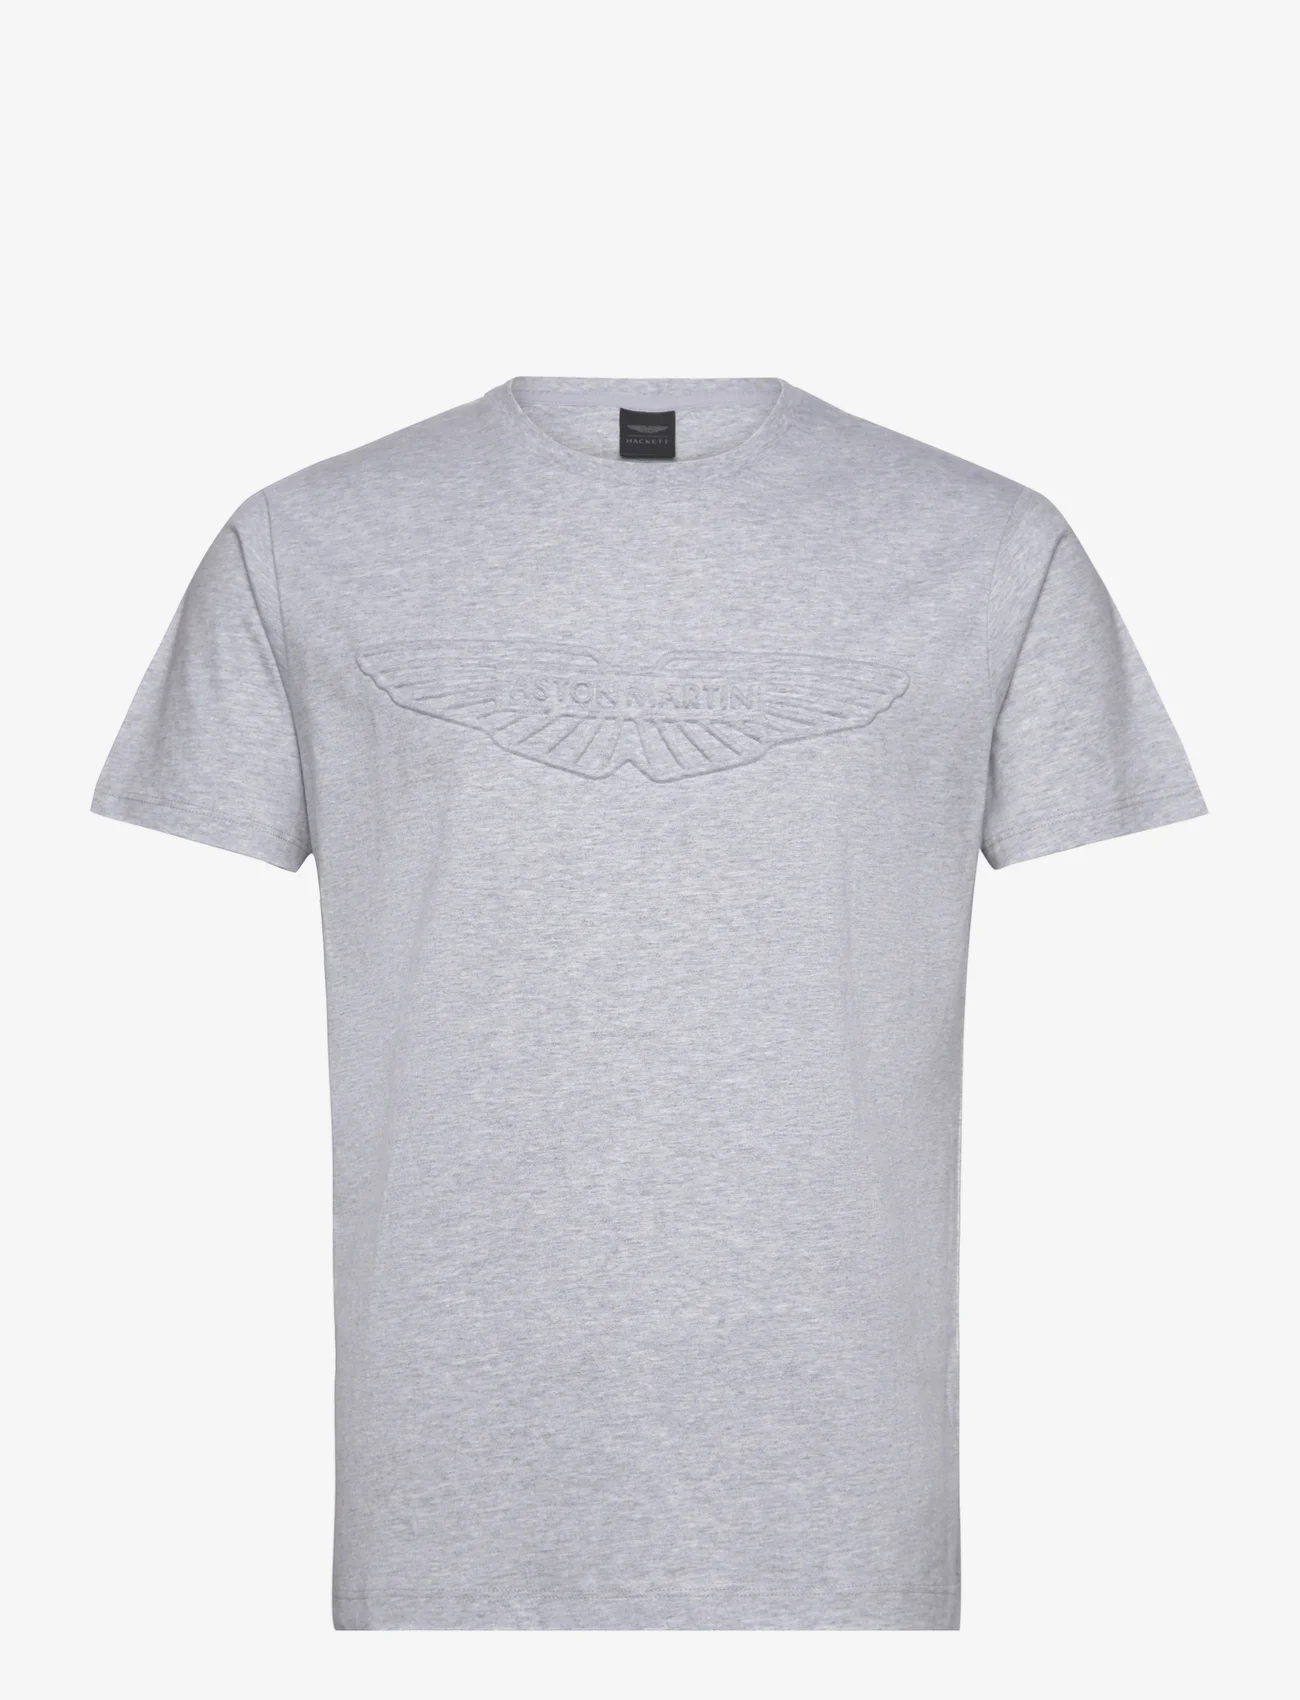 Hackett London - AM EMBOSS TEE - marškinėliai trumpomis rankovėmis - ice grey - 0